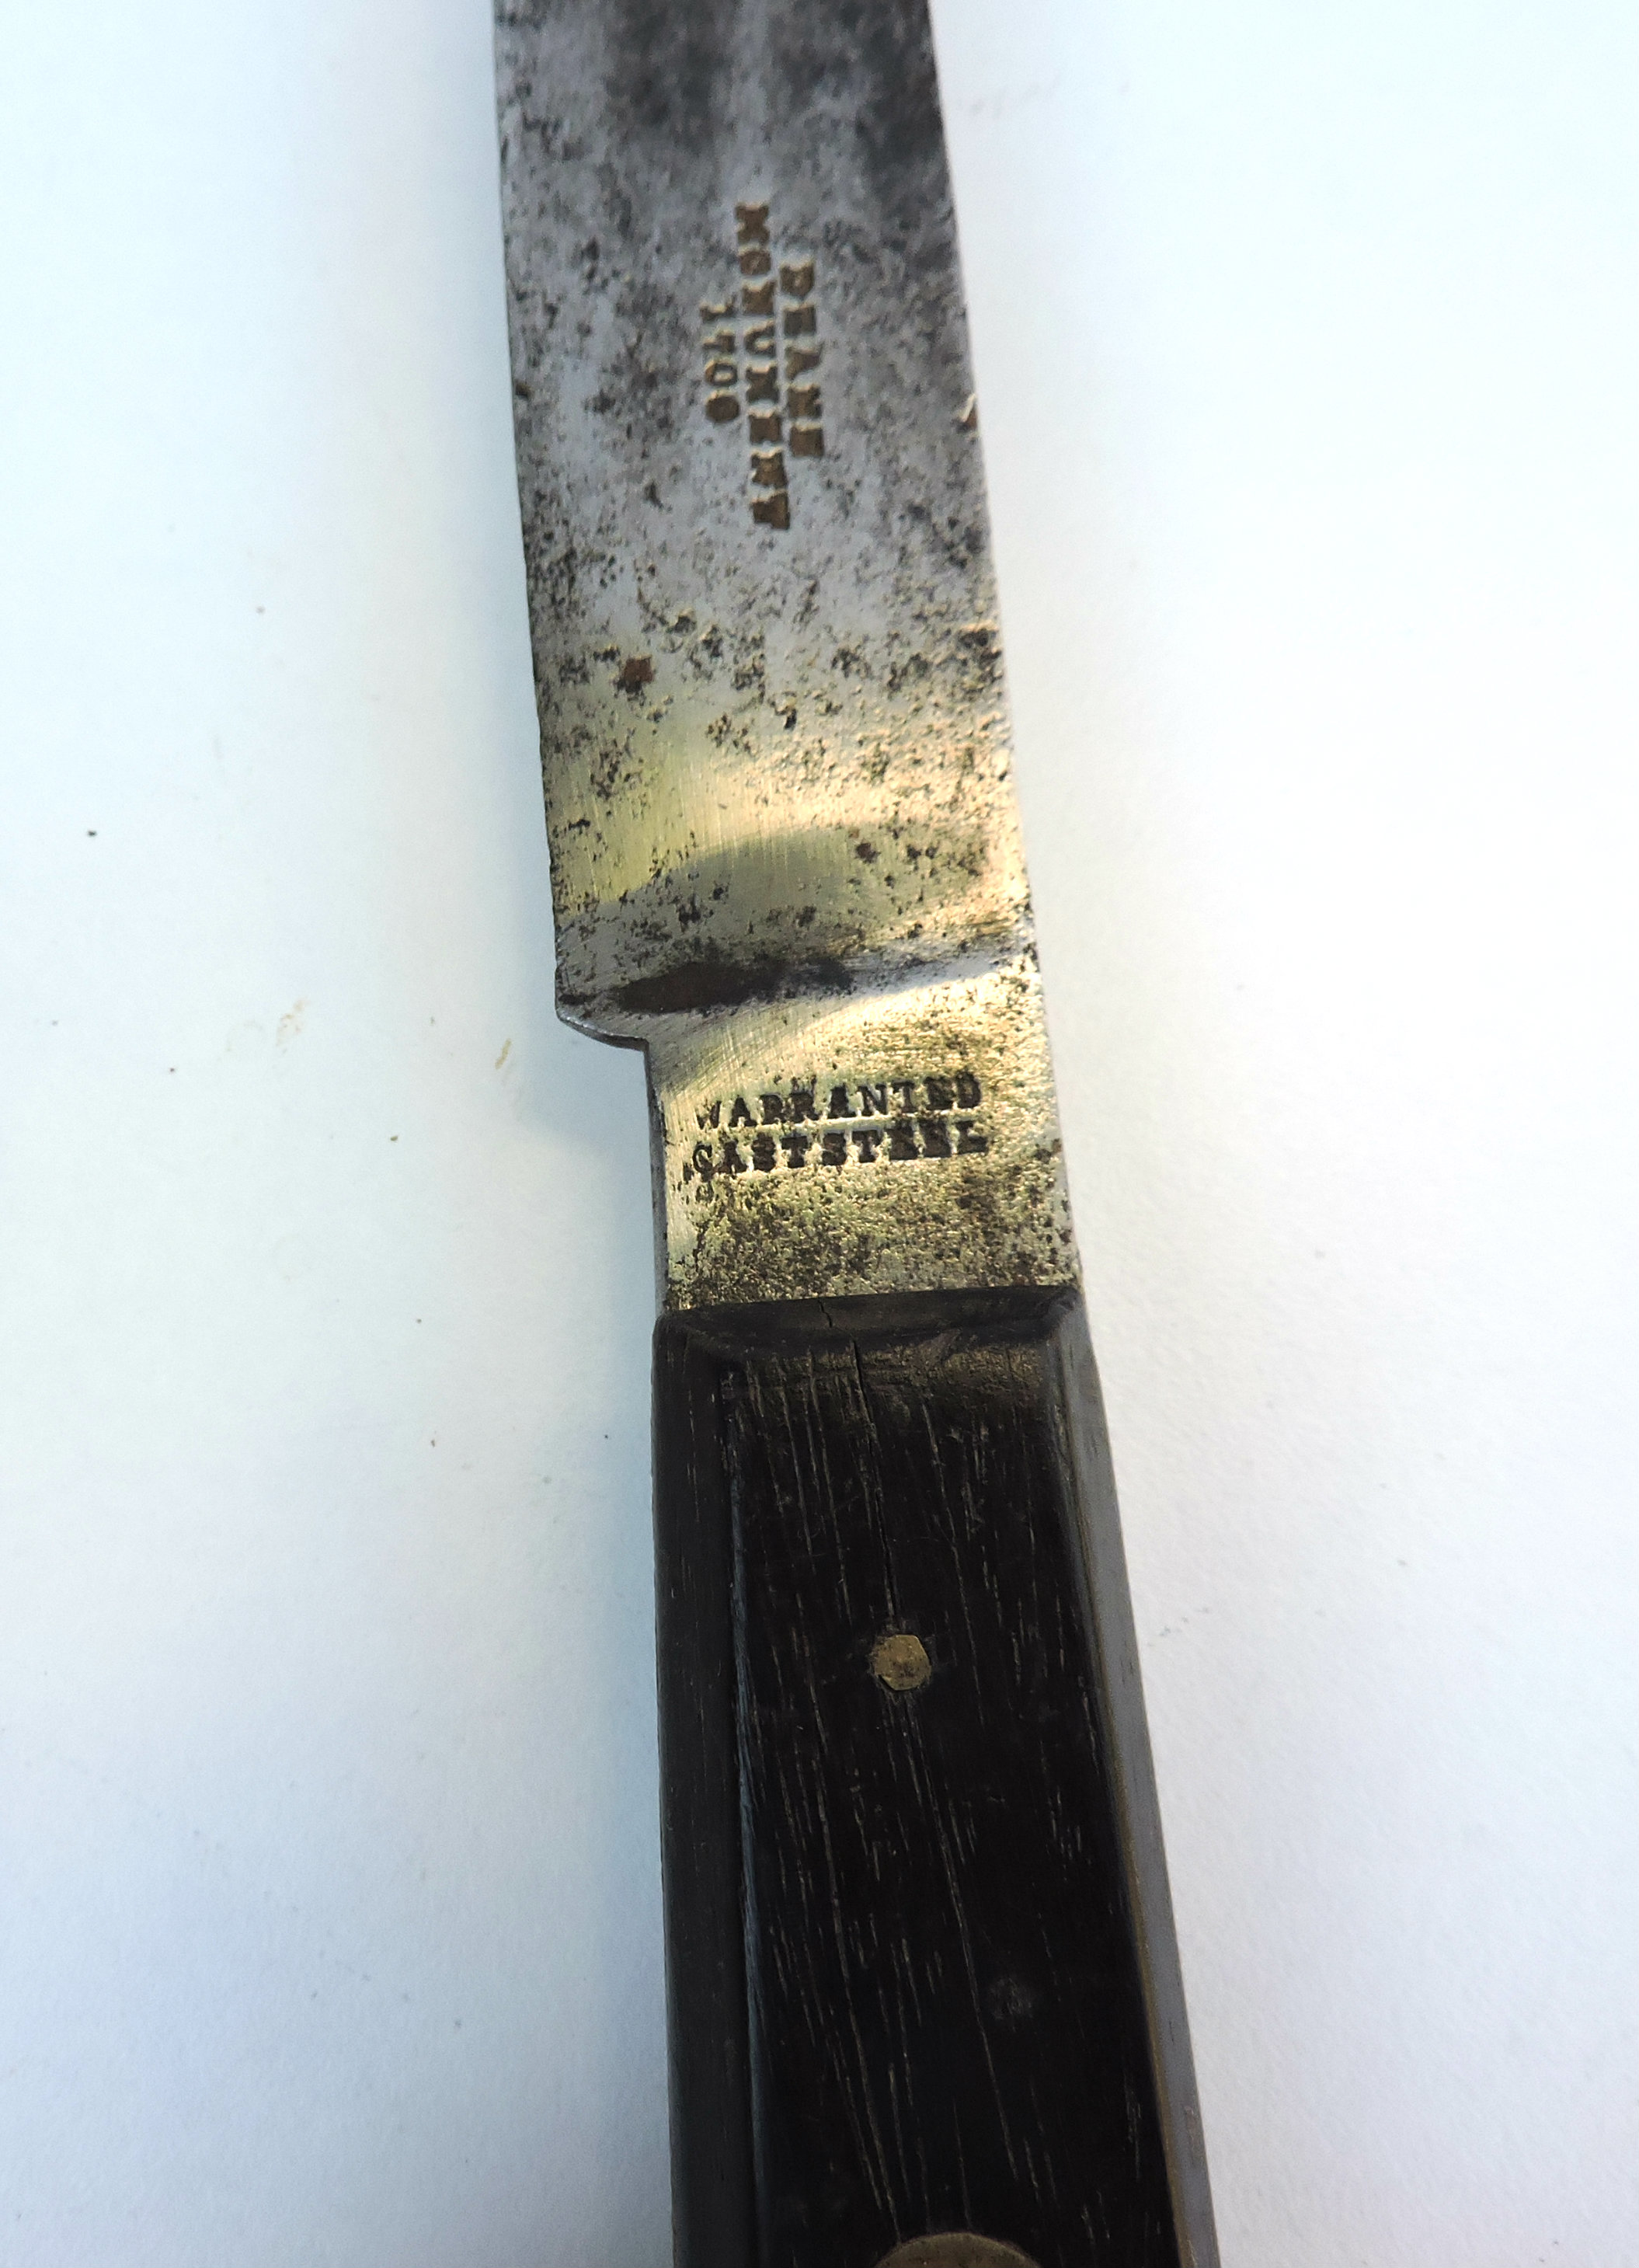 Fur trade knife Deane 19th century